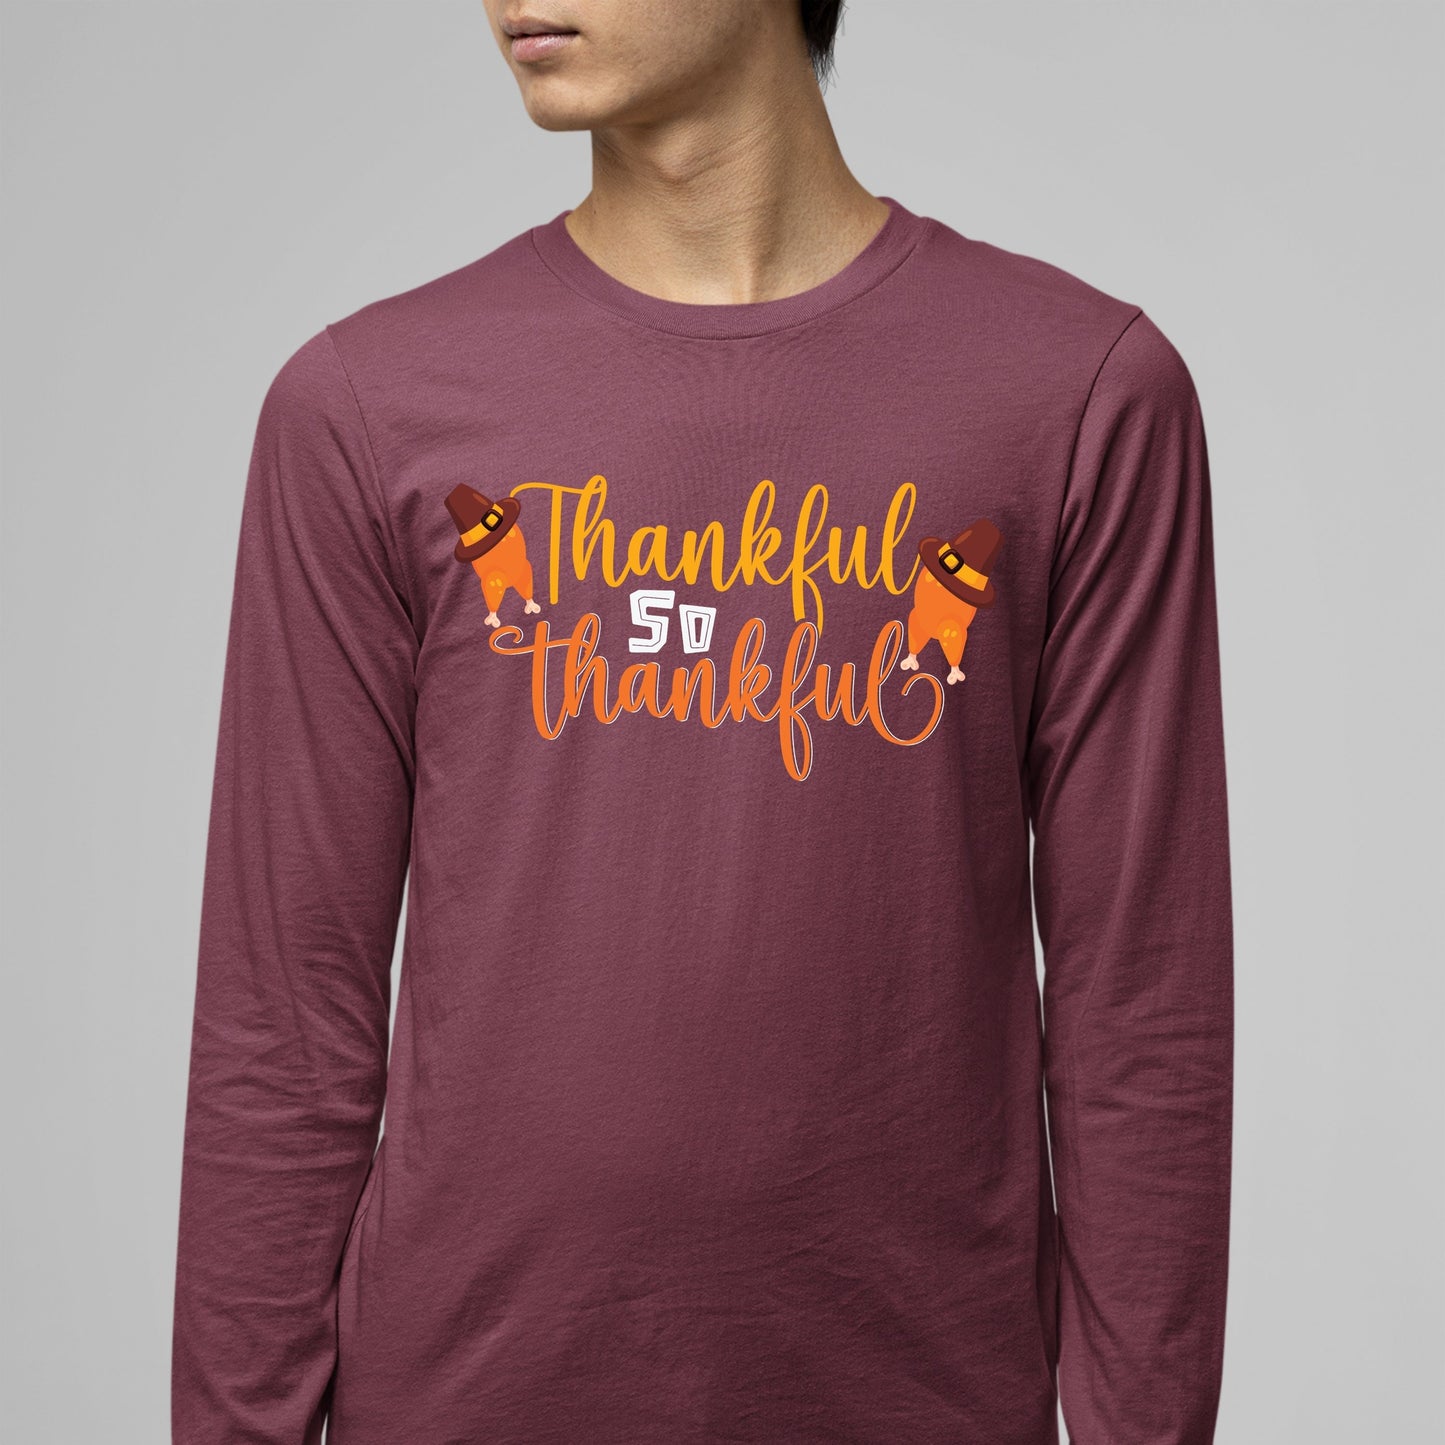 Thankful So Thankful, Thanksgiving Sweatshirt, Thanksgiving Sweater for Men, Thanksgiving Gift Ideas, Cute Thanksgiving